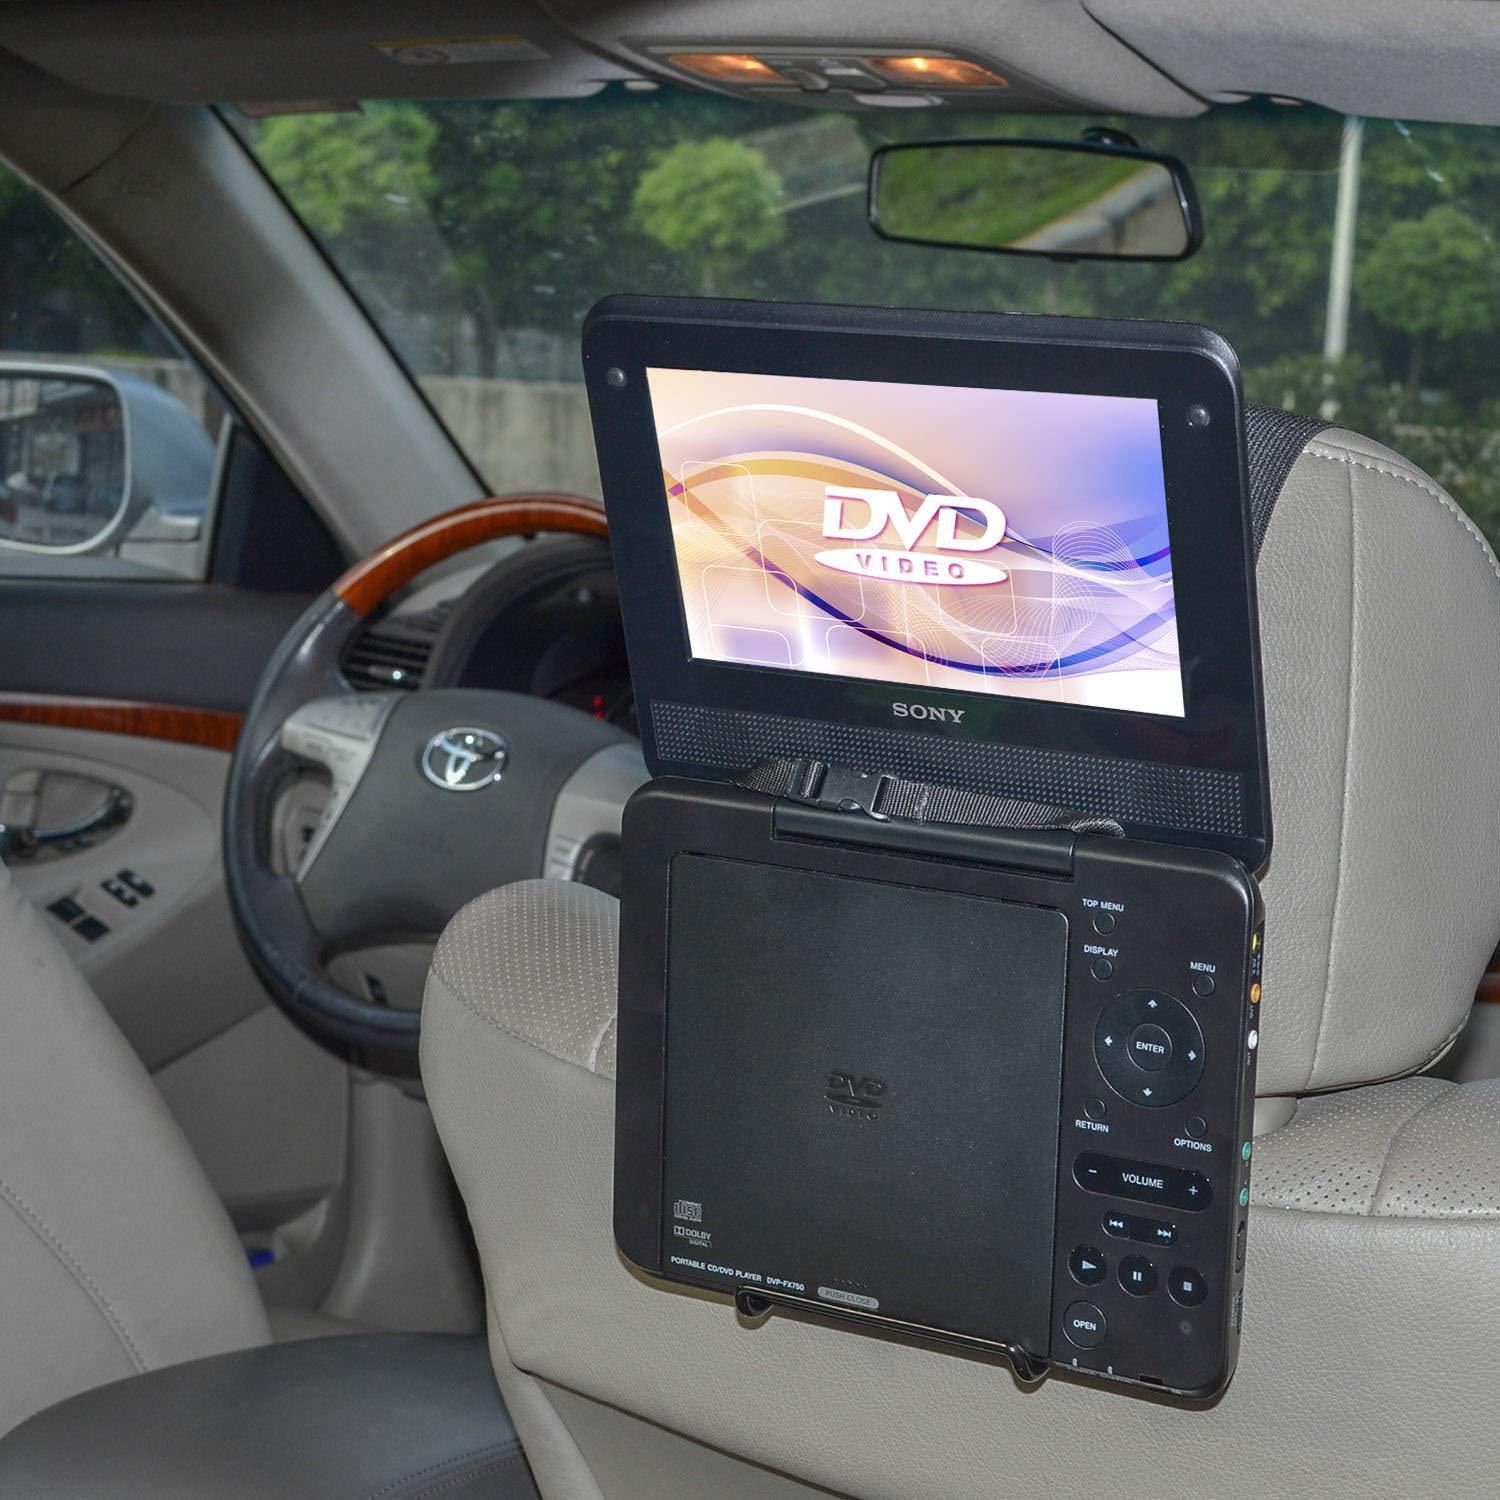 TFY, TFY Car Headrest Mount Holder for Standard (Laptop Style) Portable DVD Player